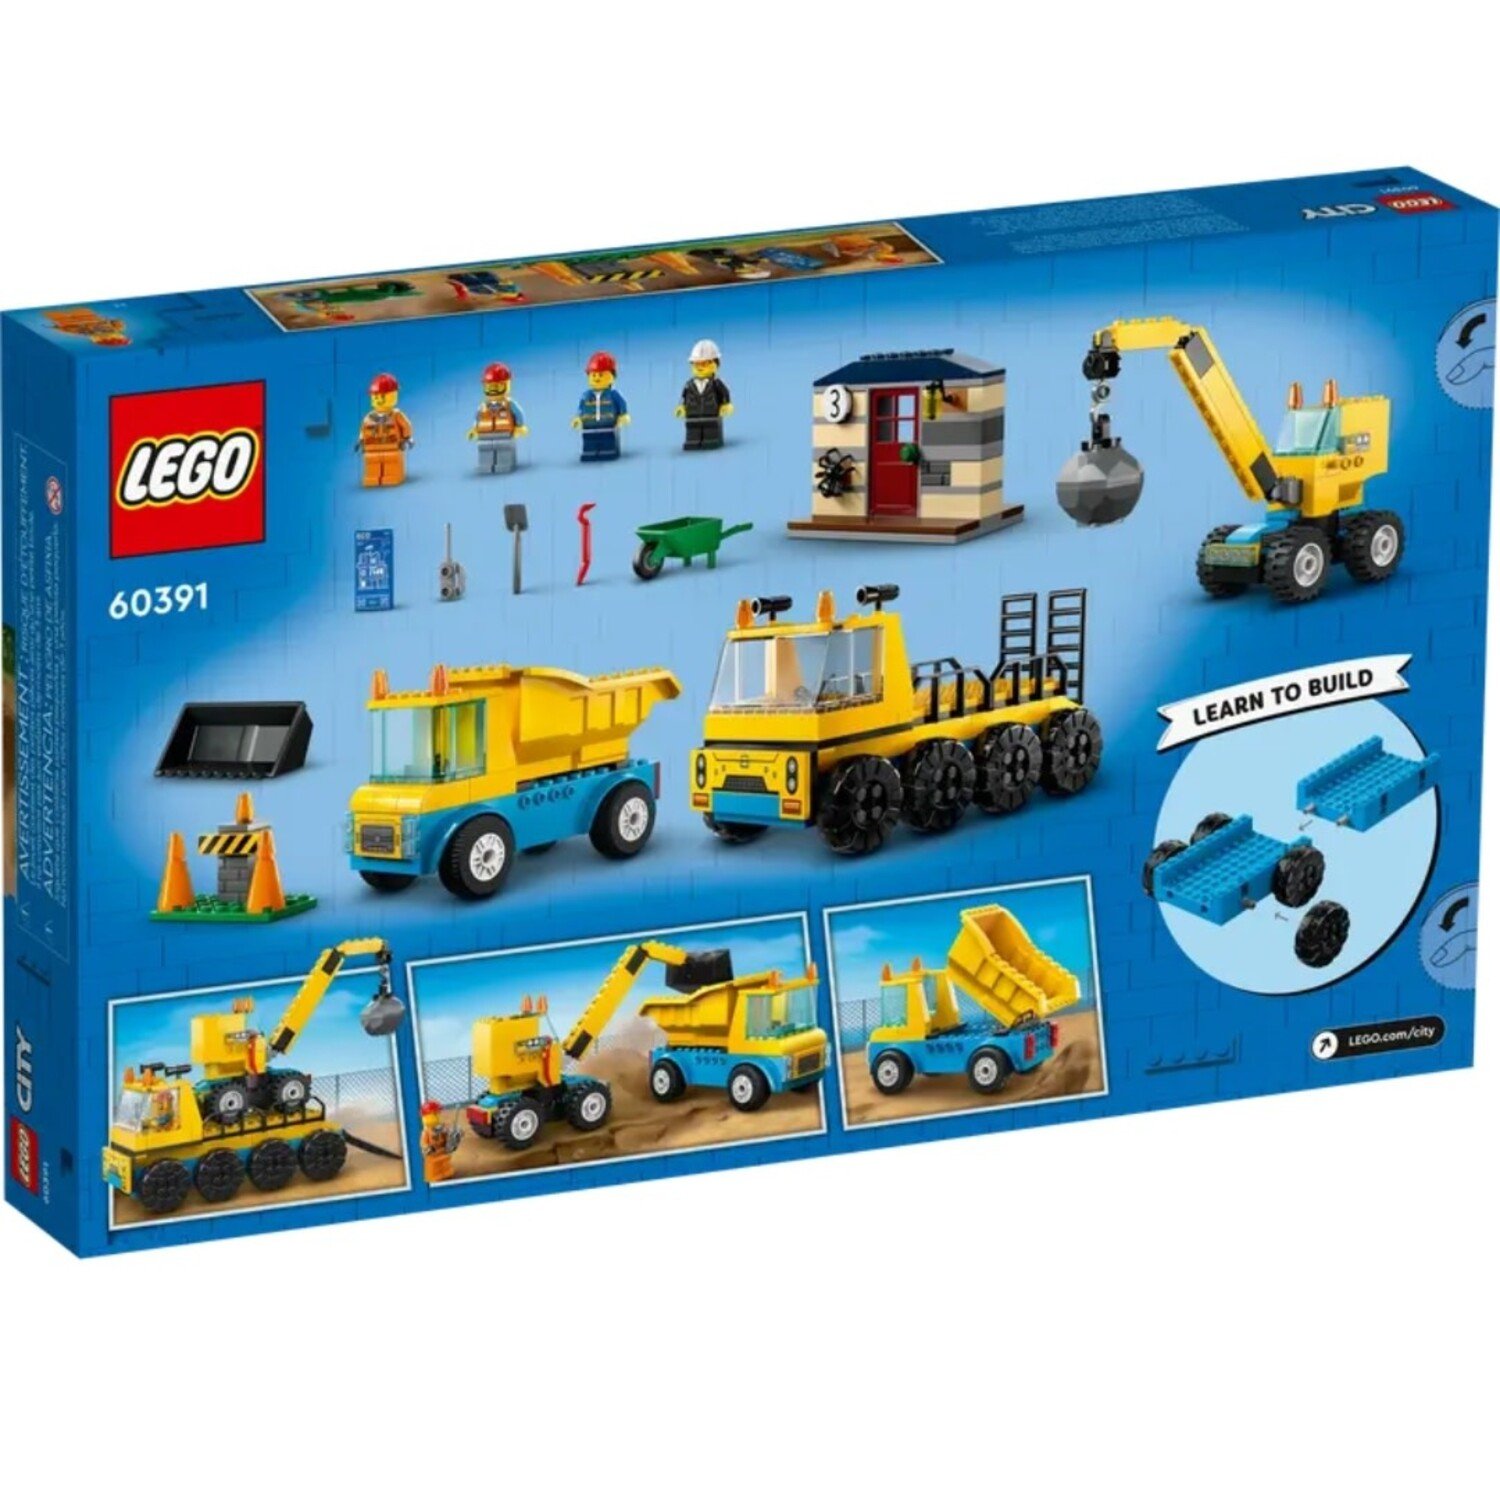 Construction Trucks and Wrecking Ball Crane LEGO City - Mudpuddles